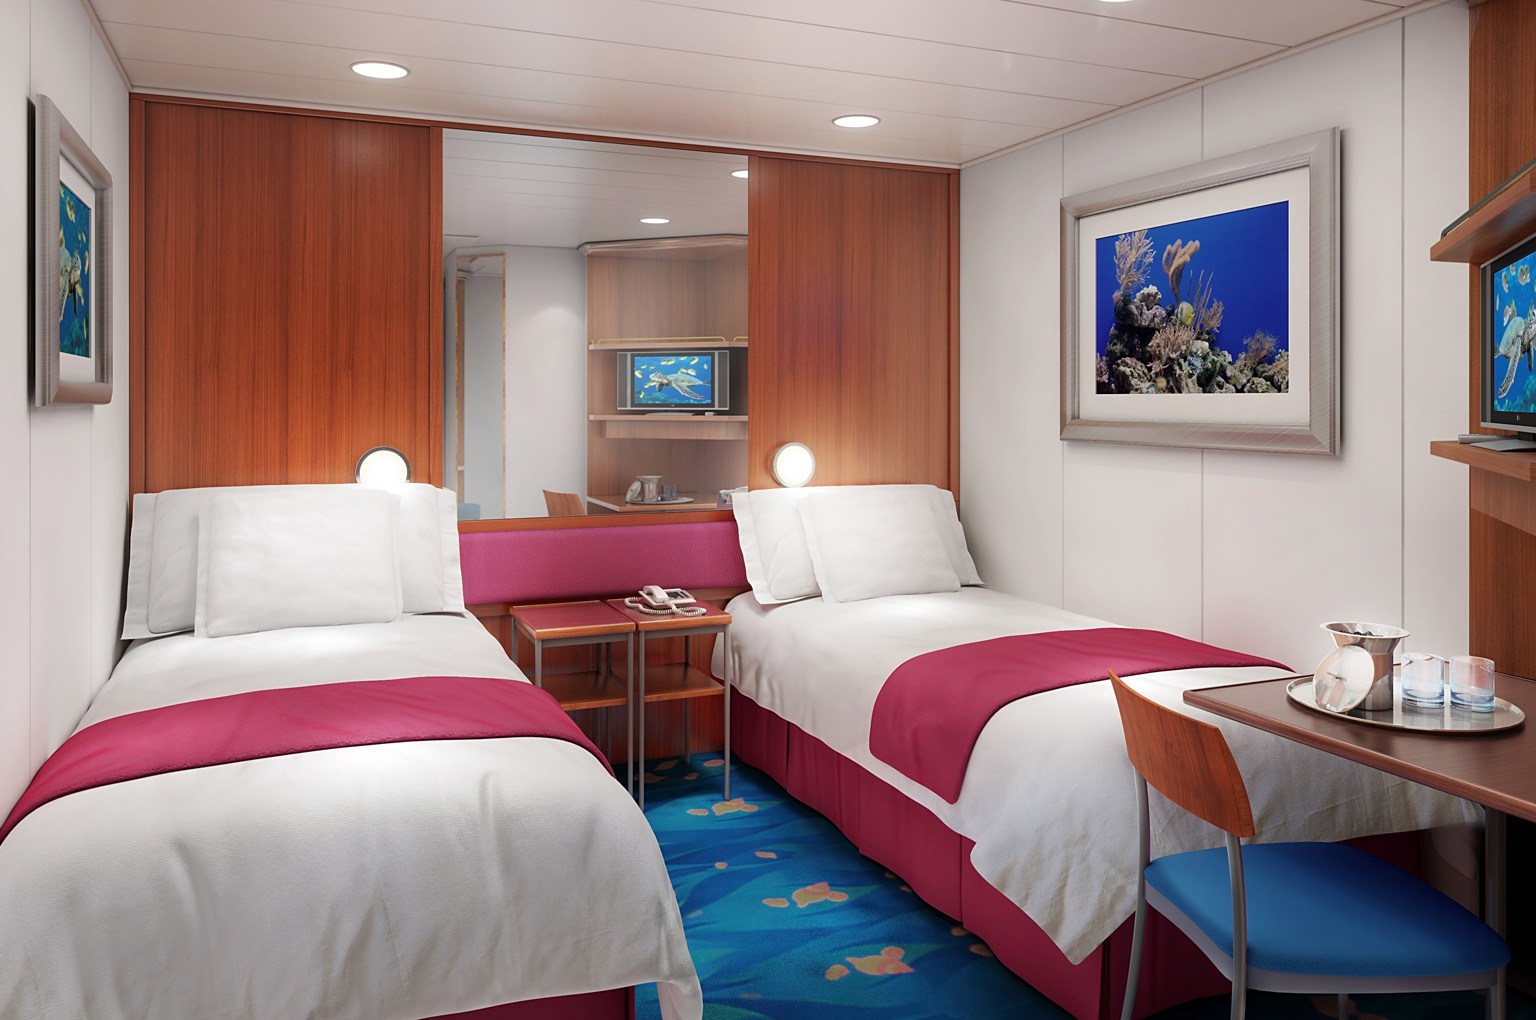 Norwegian Jewel Cruise Ship Reviews Itineraries